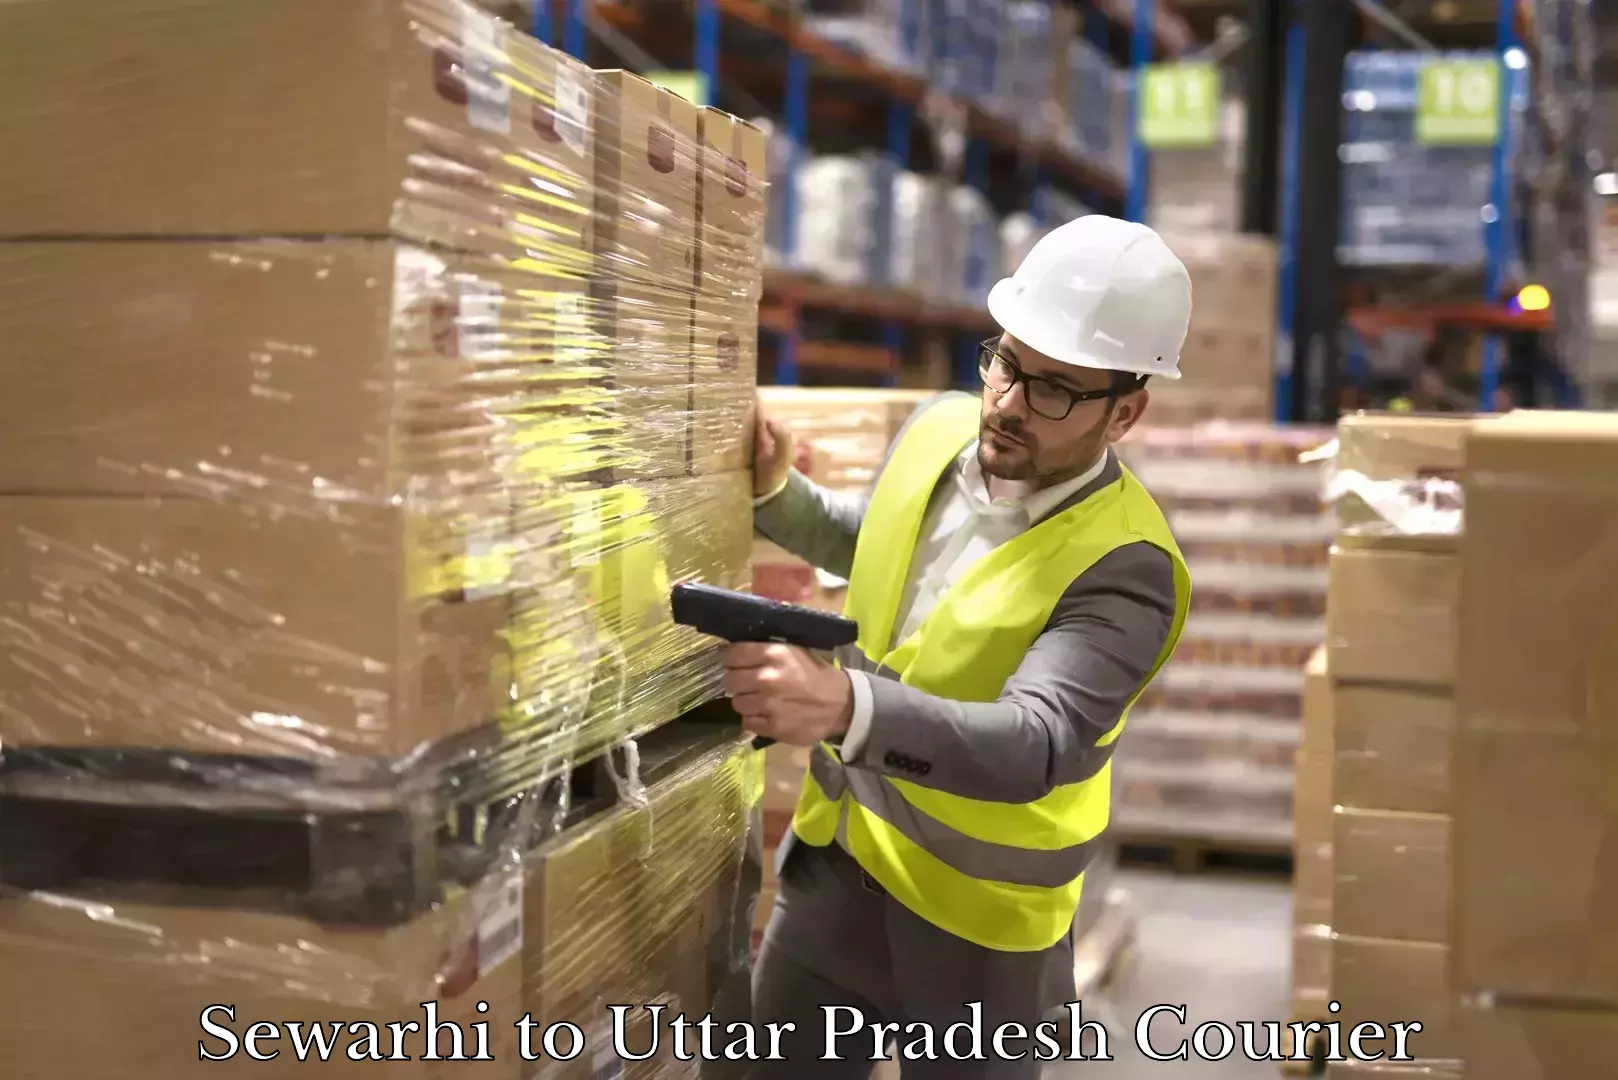 Express logistics providers Sewarhi to Uttar Pradesh